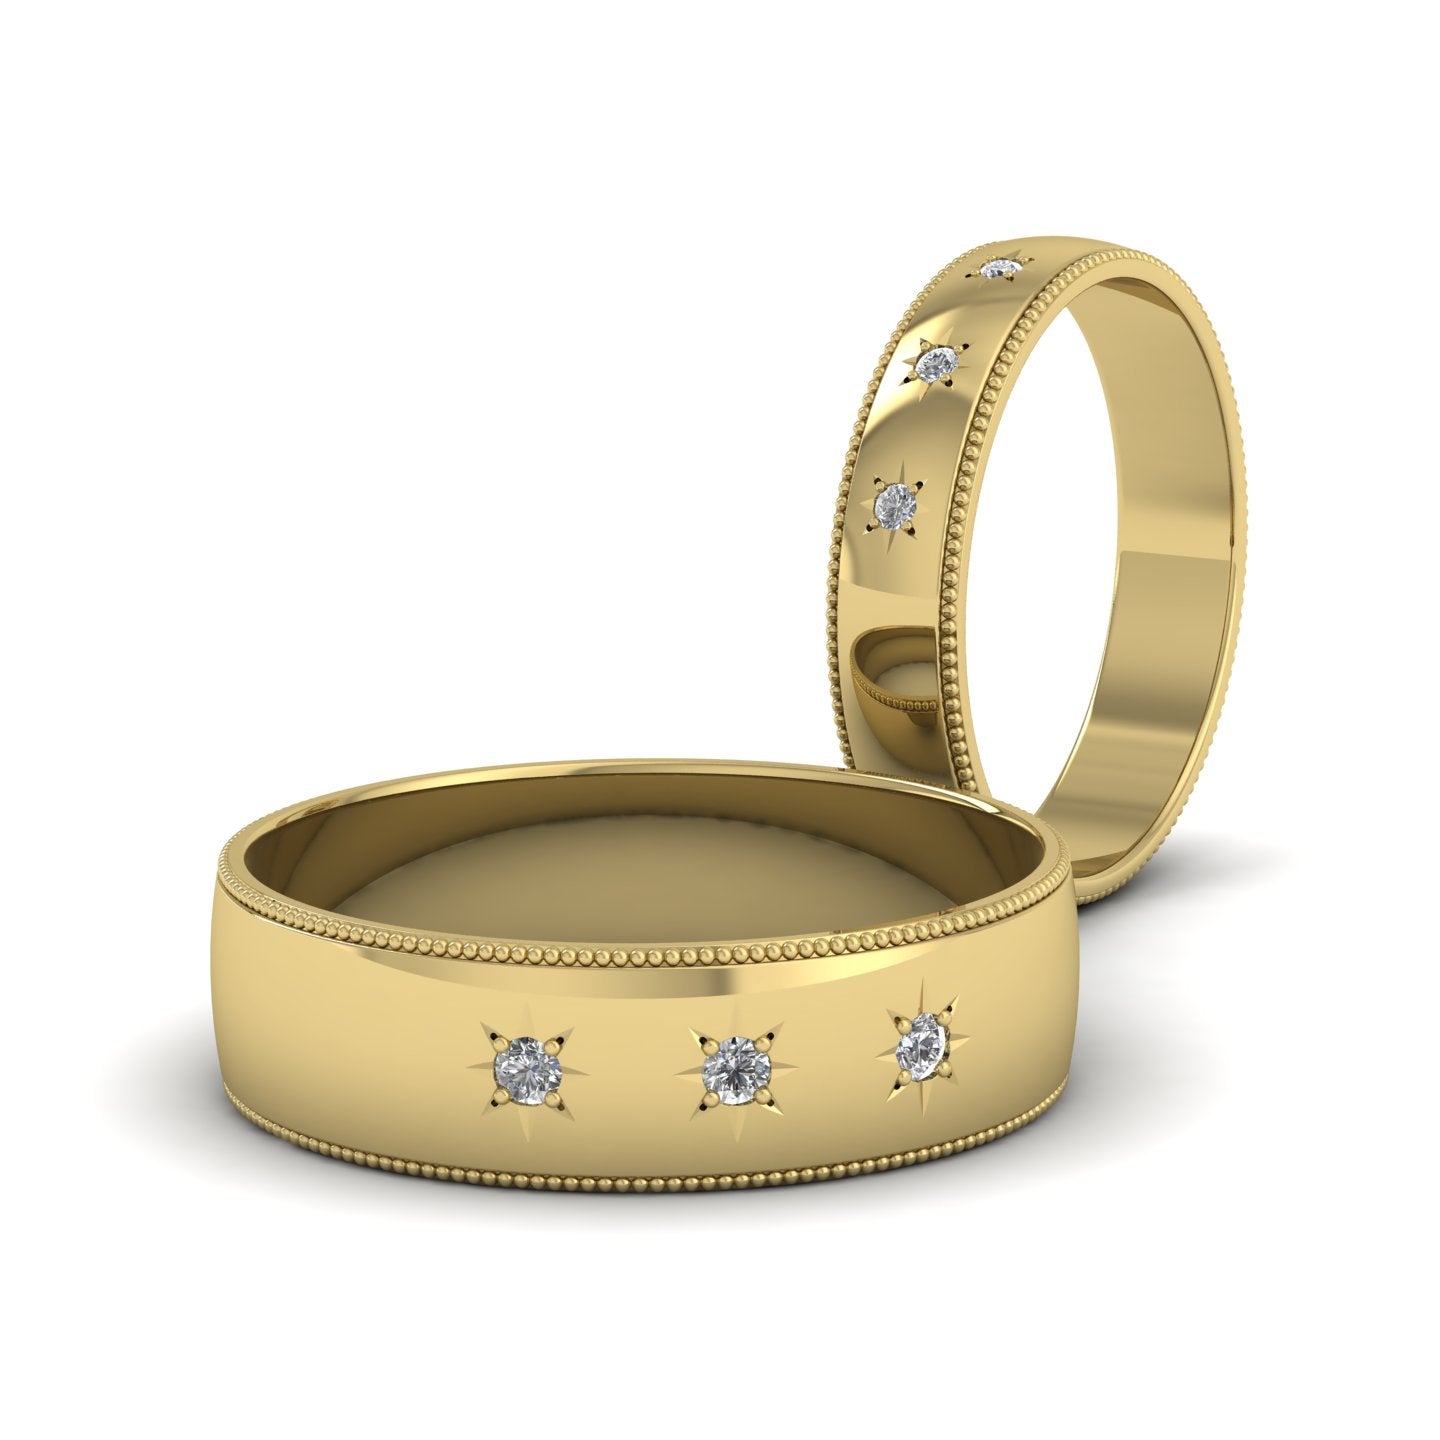 Millgrained Edge And Three Star Diamond Set 14ct Yellow Gold 6mm Wedding Ring